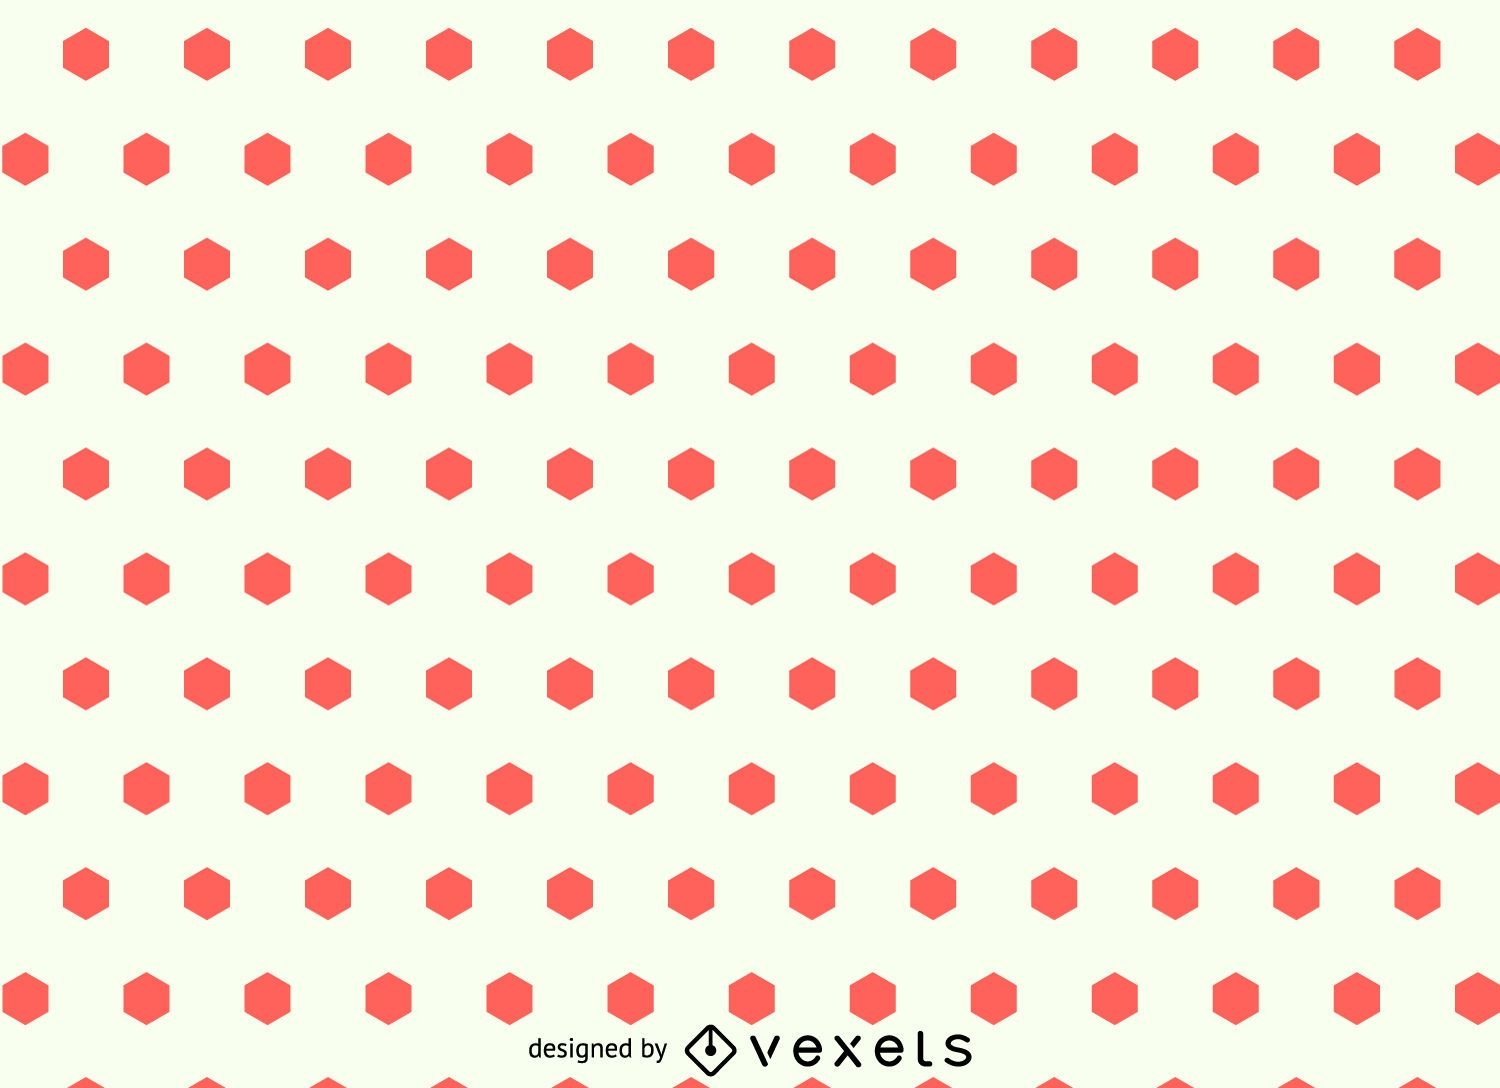 Hexagon dots seamless pattern